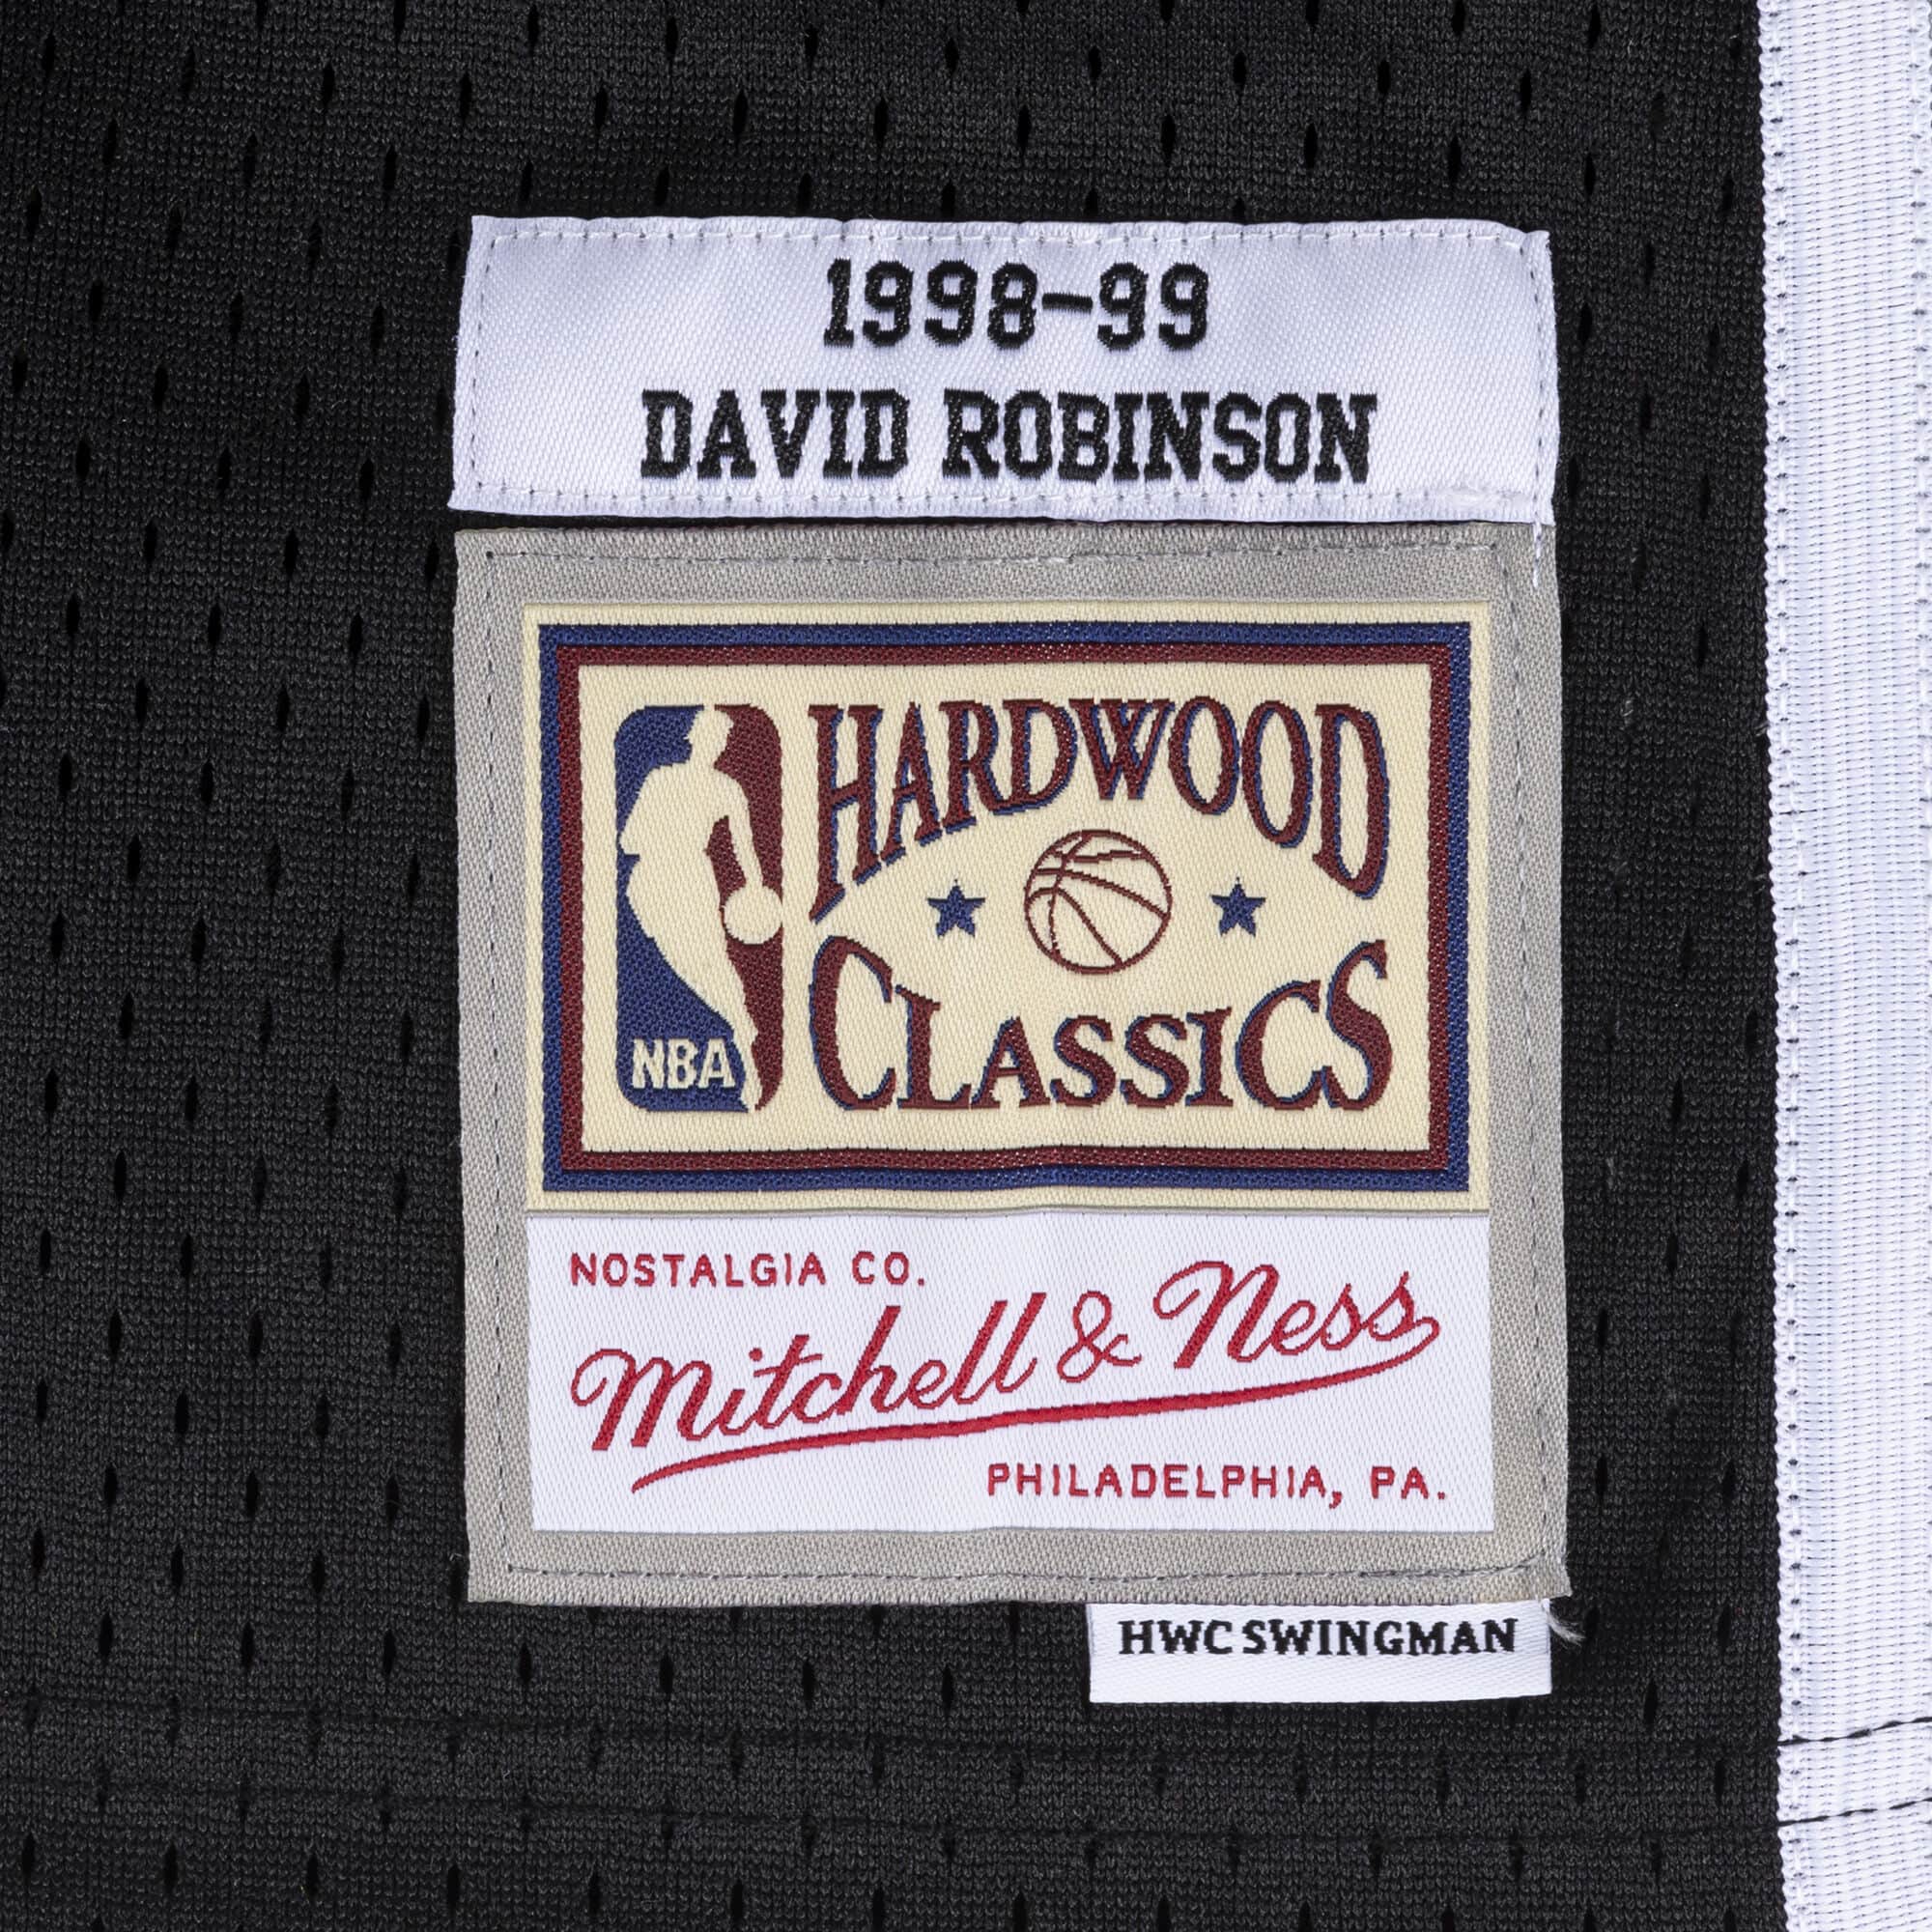 Mitchell & Ness Men's San Antonio Spurs David Robinson #50 Swingman Jersey, Size: 2XT, Black